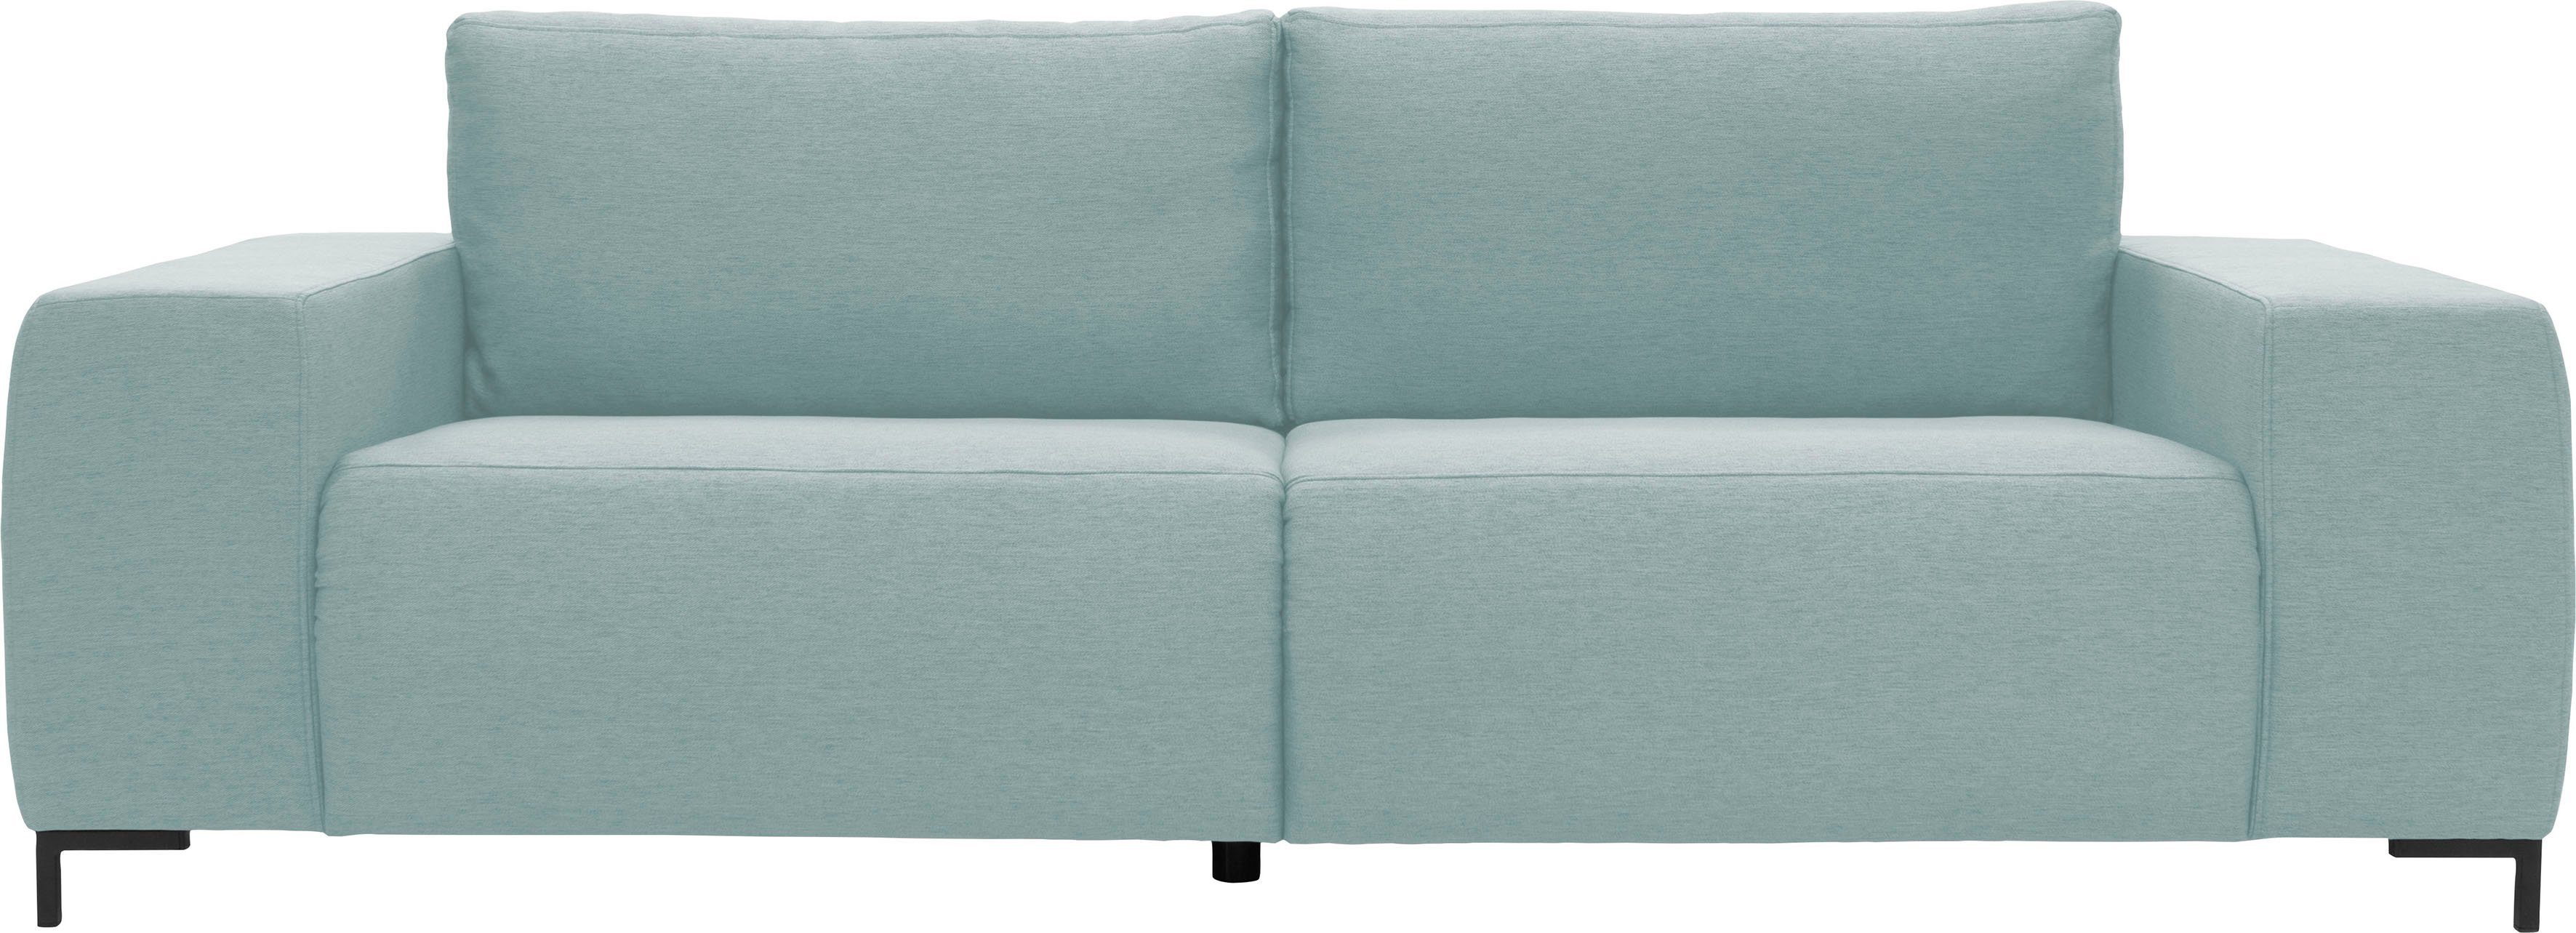 Looks Big-Sofa by in VI, LOOKS gerade Joop Linien, Wolfgang Bezugsqualitäten 2